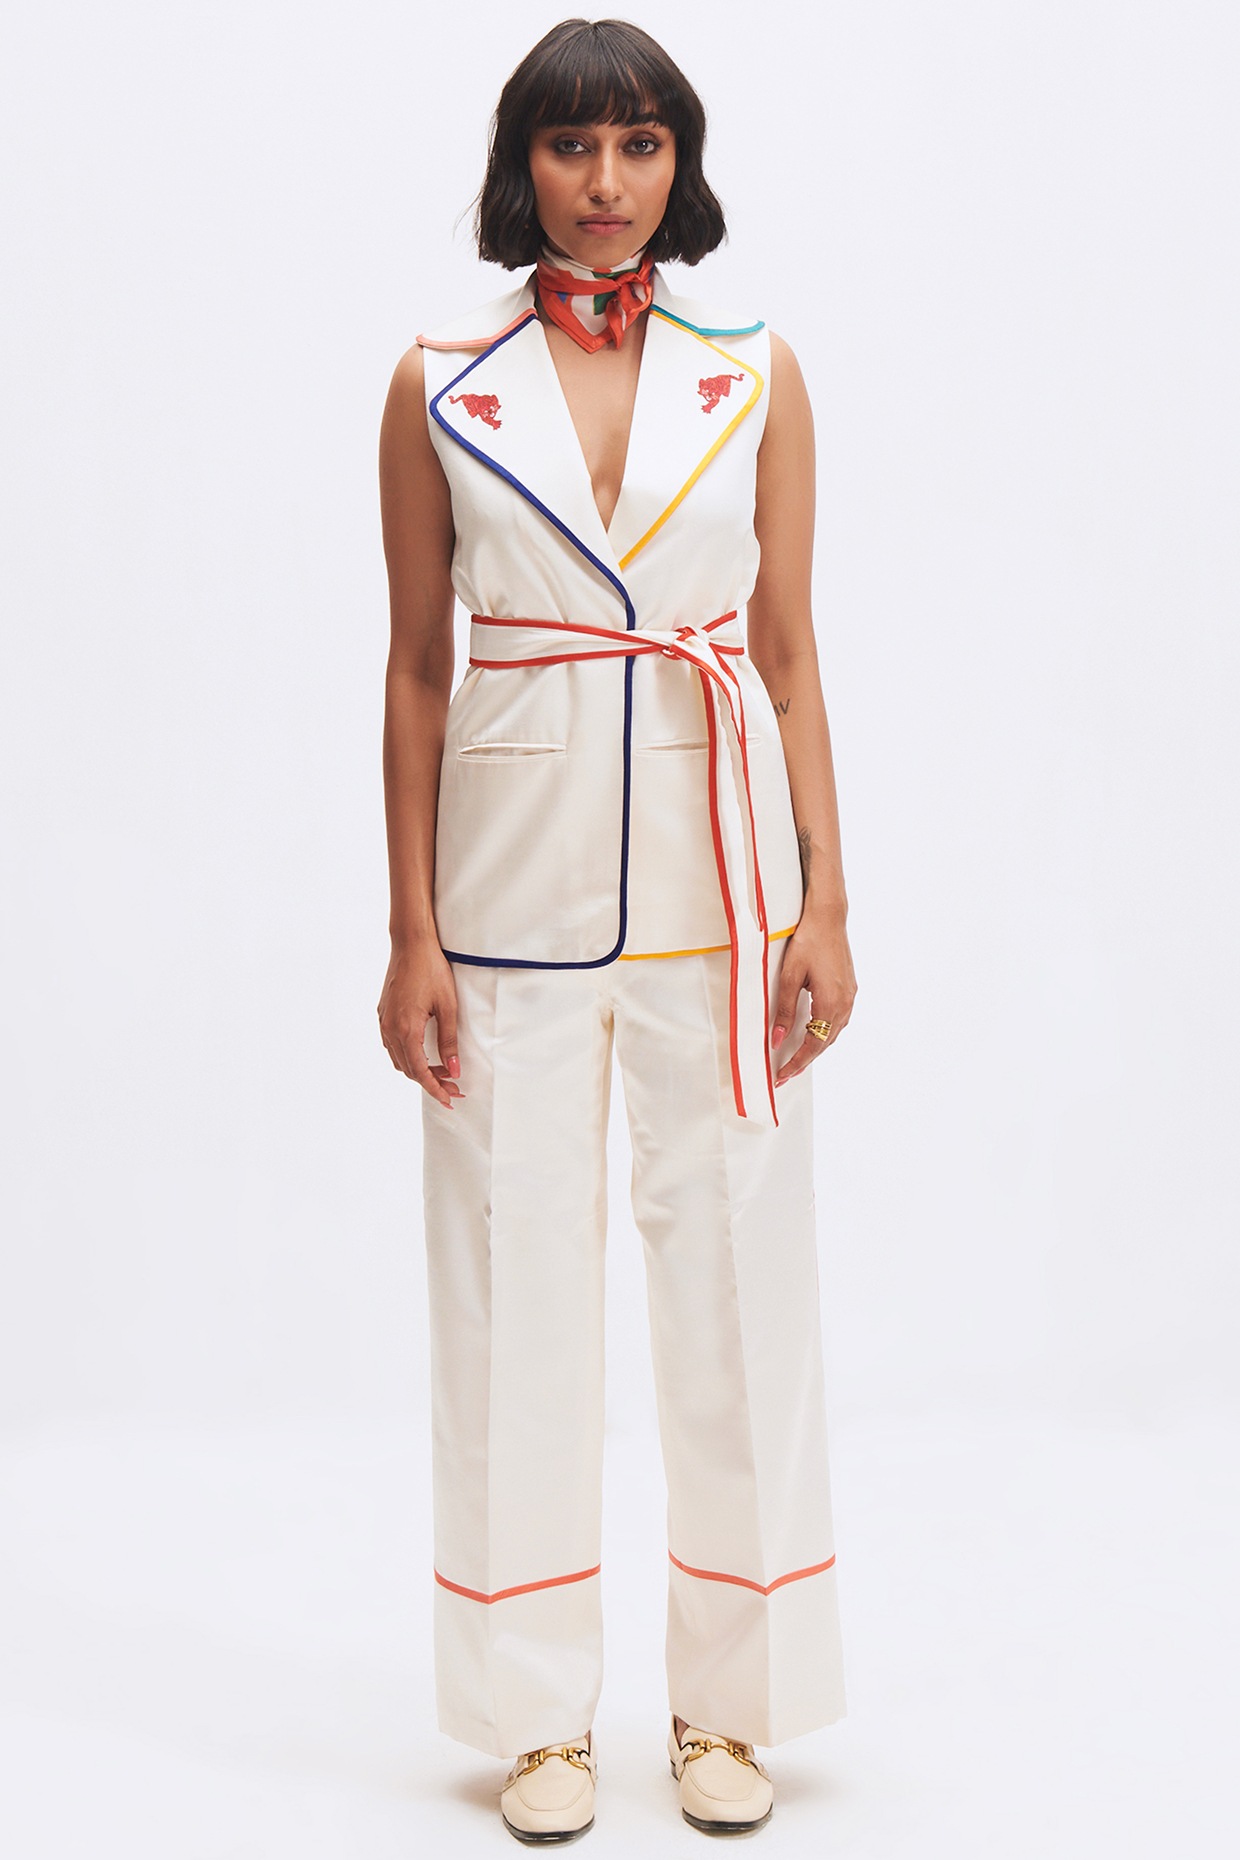 Ladies Suits - Buy Fancy Designer suit for women Online at Myntra